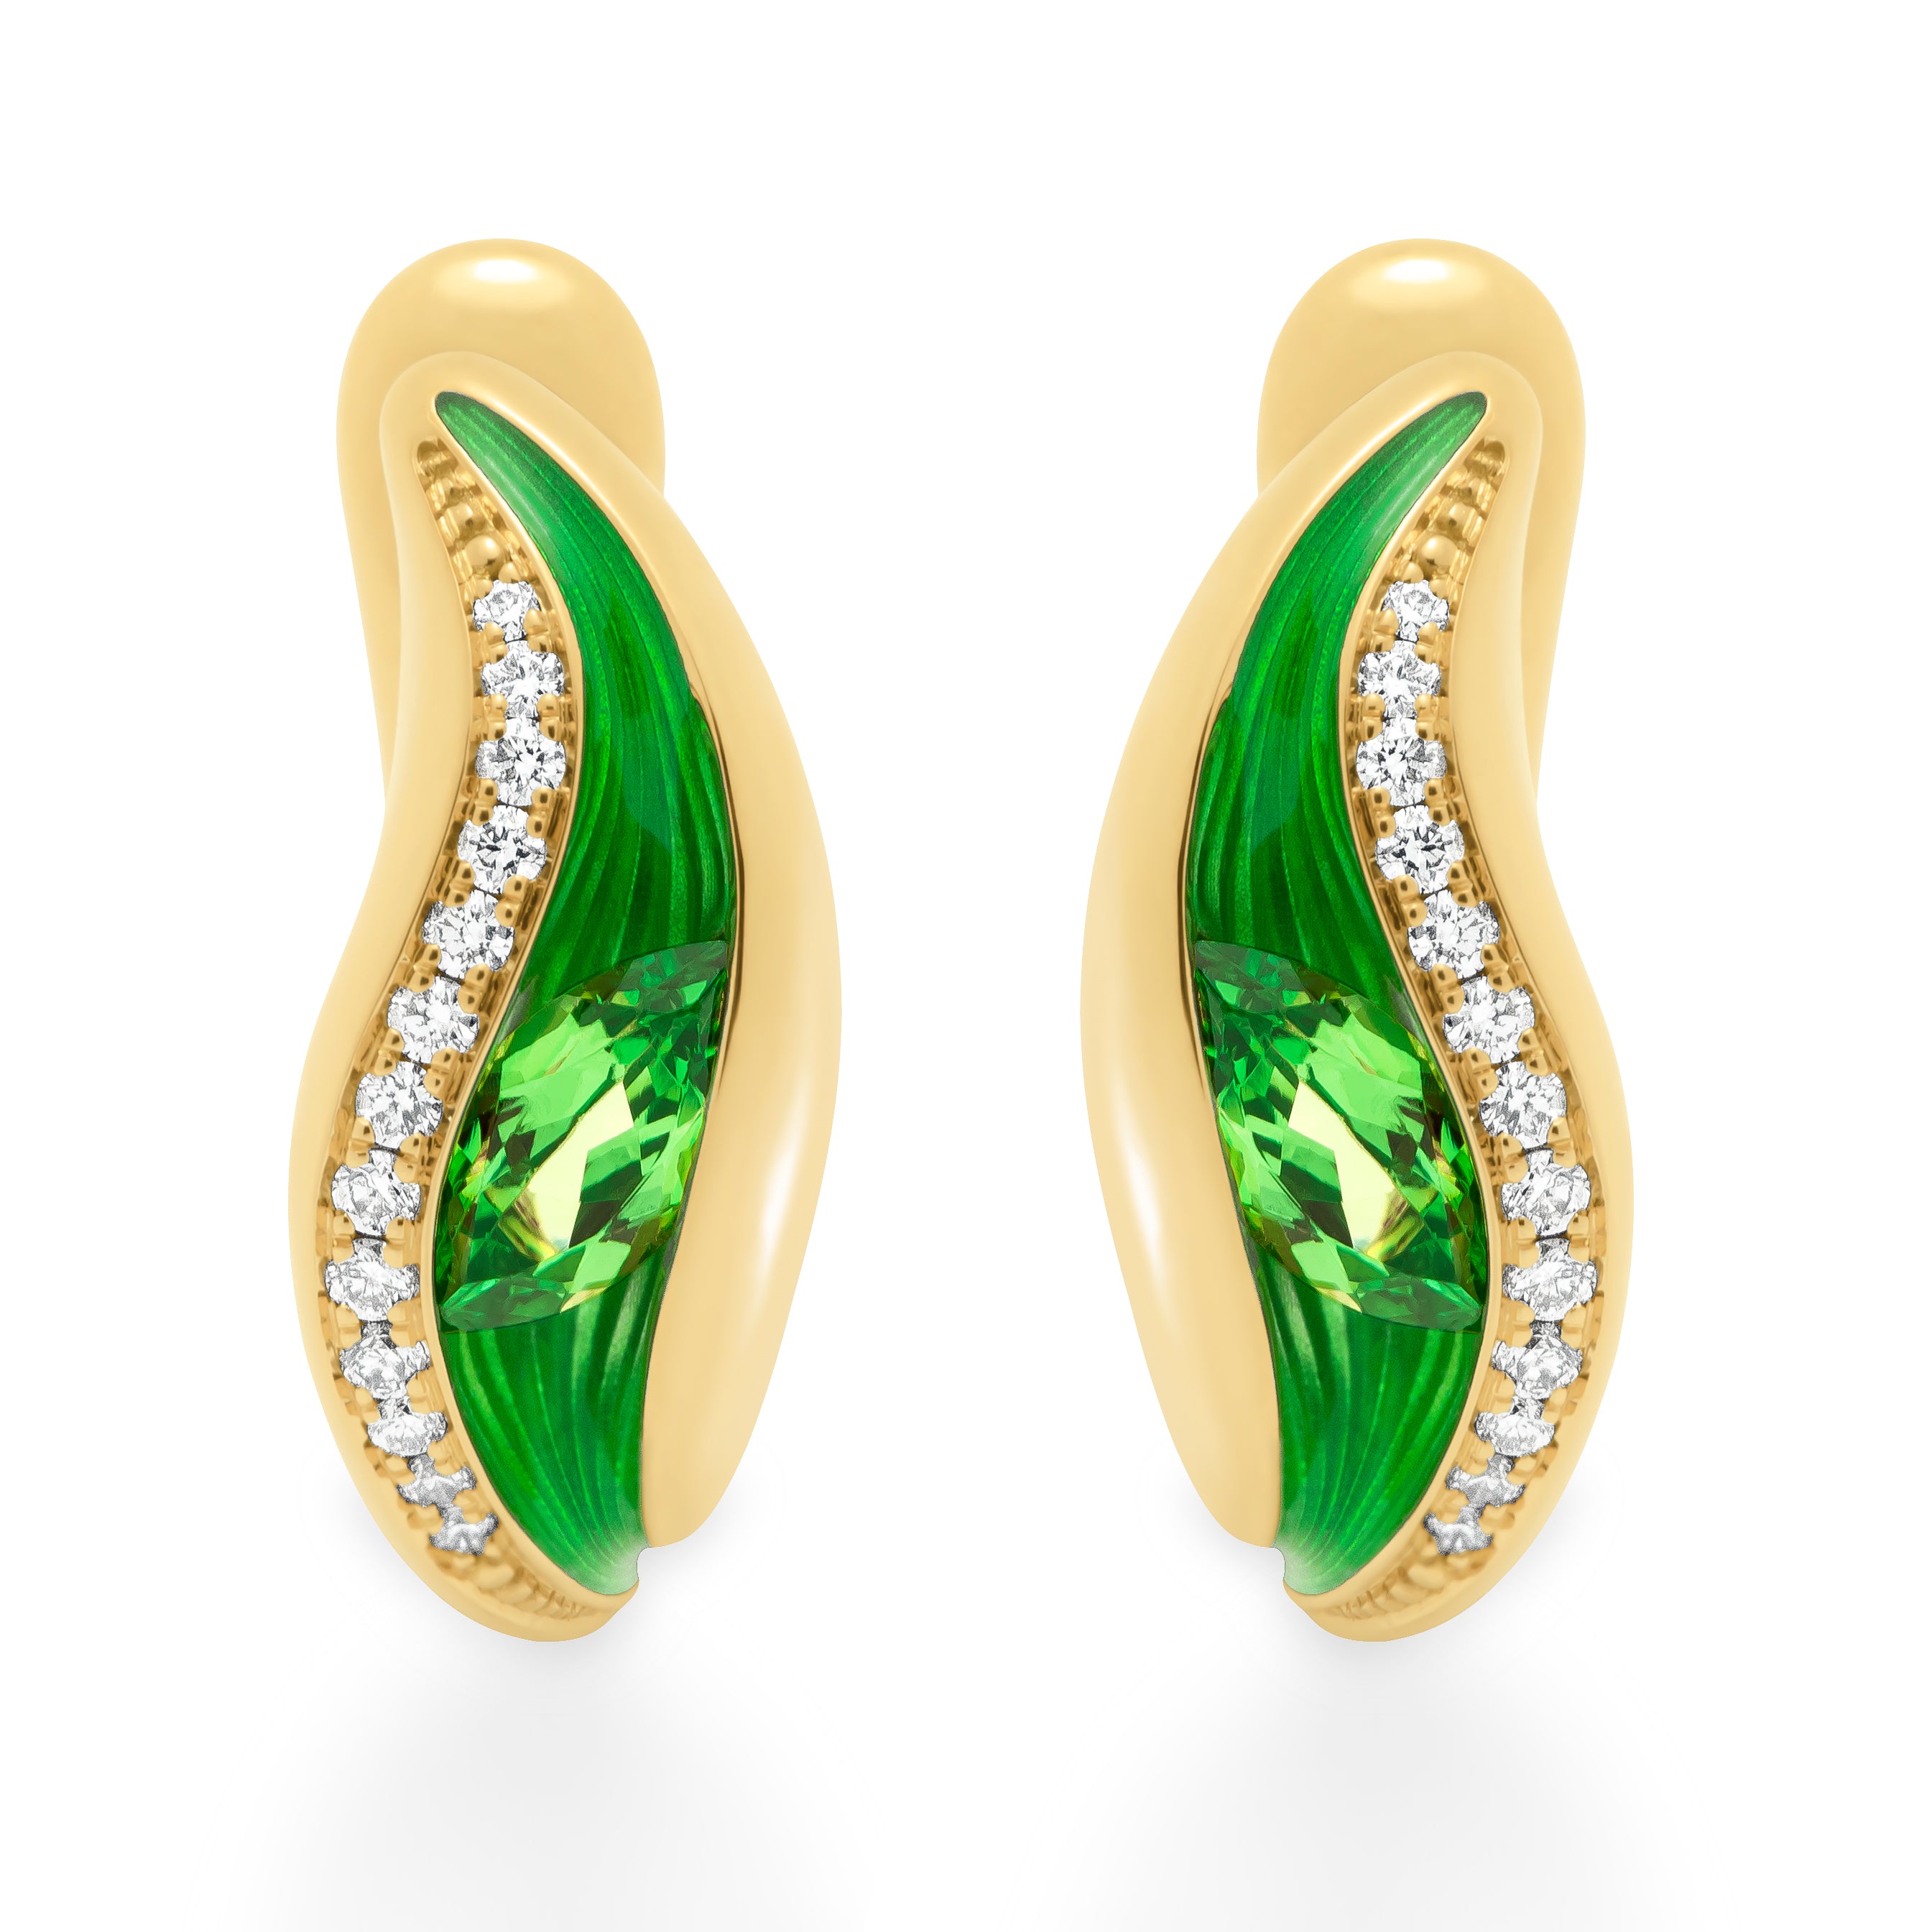 E 0123-80, 18K Yellow Gold, Enamel, Tsavorite Garnet, Diamonds Earrings